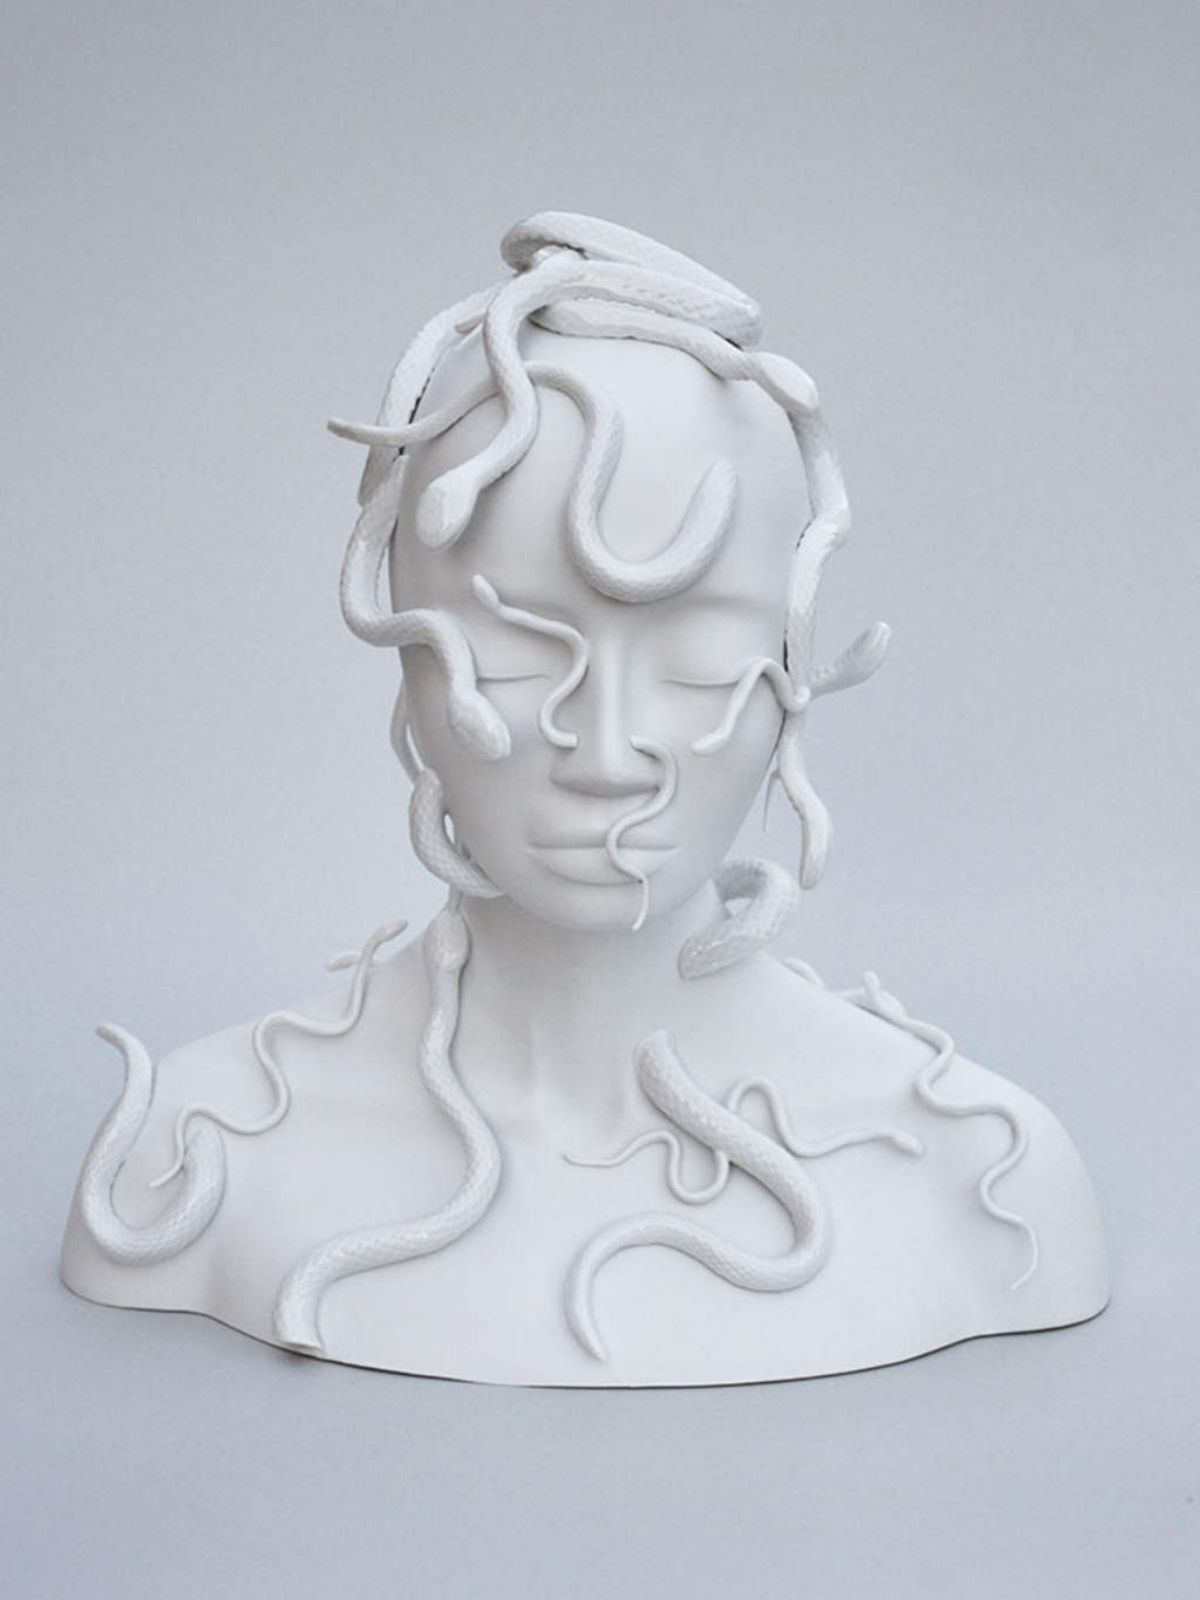 Contemporary Flower-Faced Sculptures That Shape the Future of Ceramics - gallery 2.2 - juliette clovis - on thursd